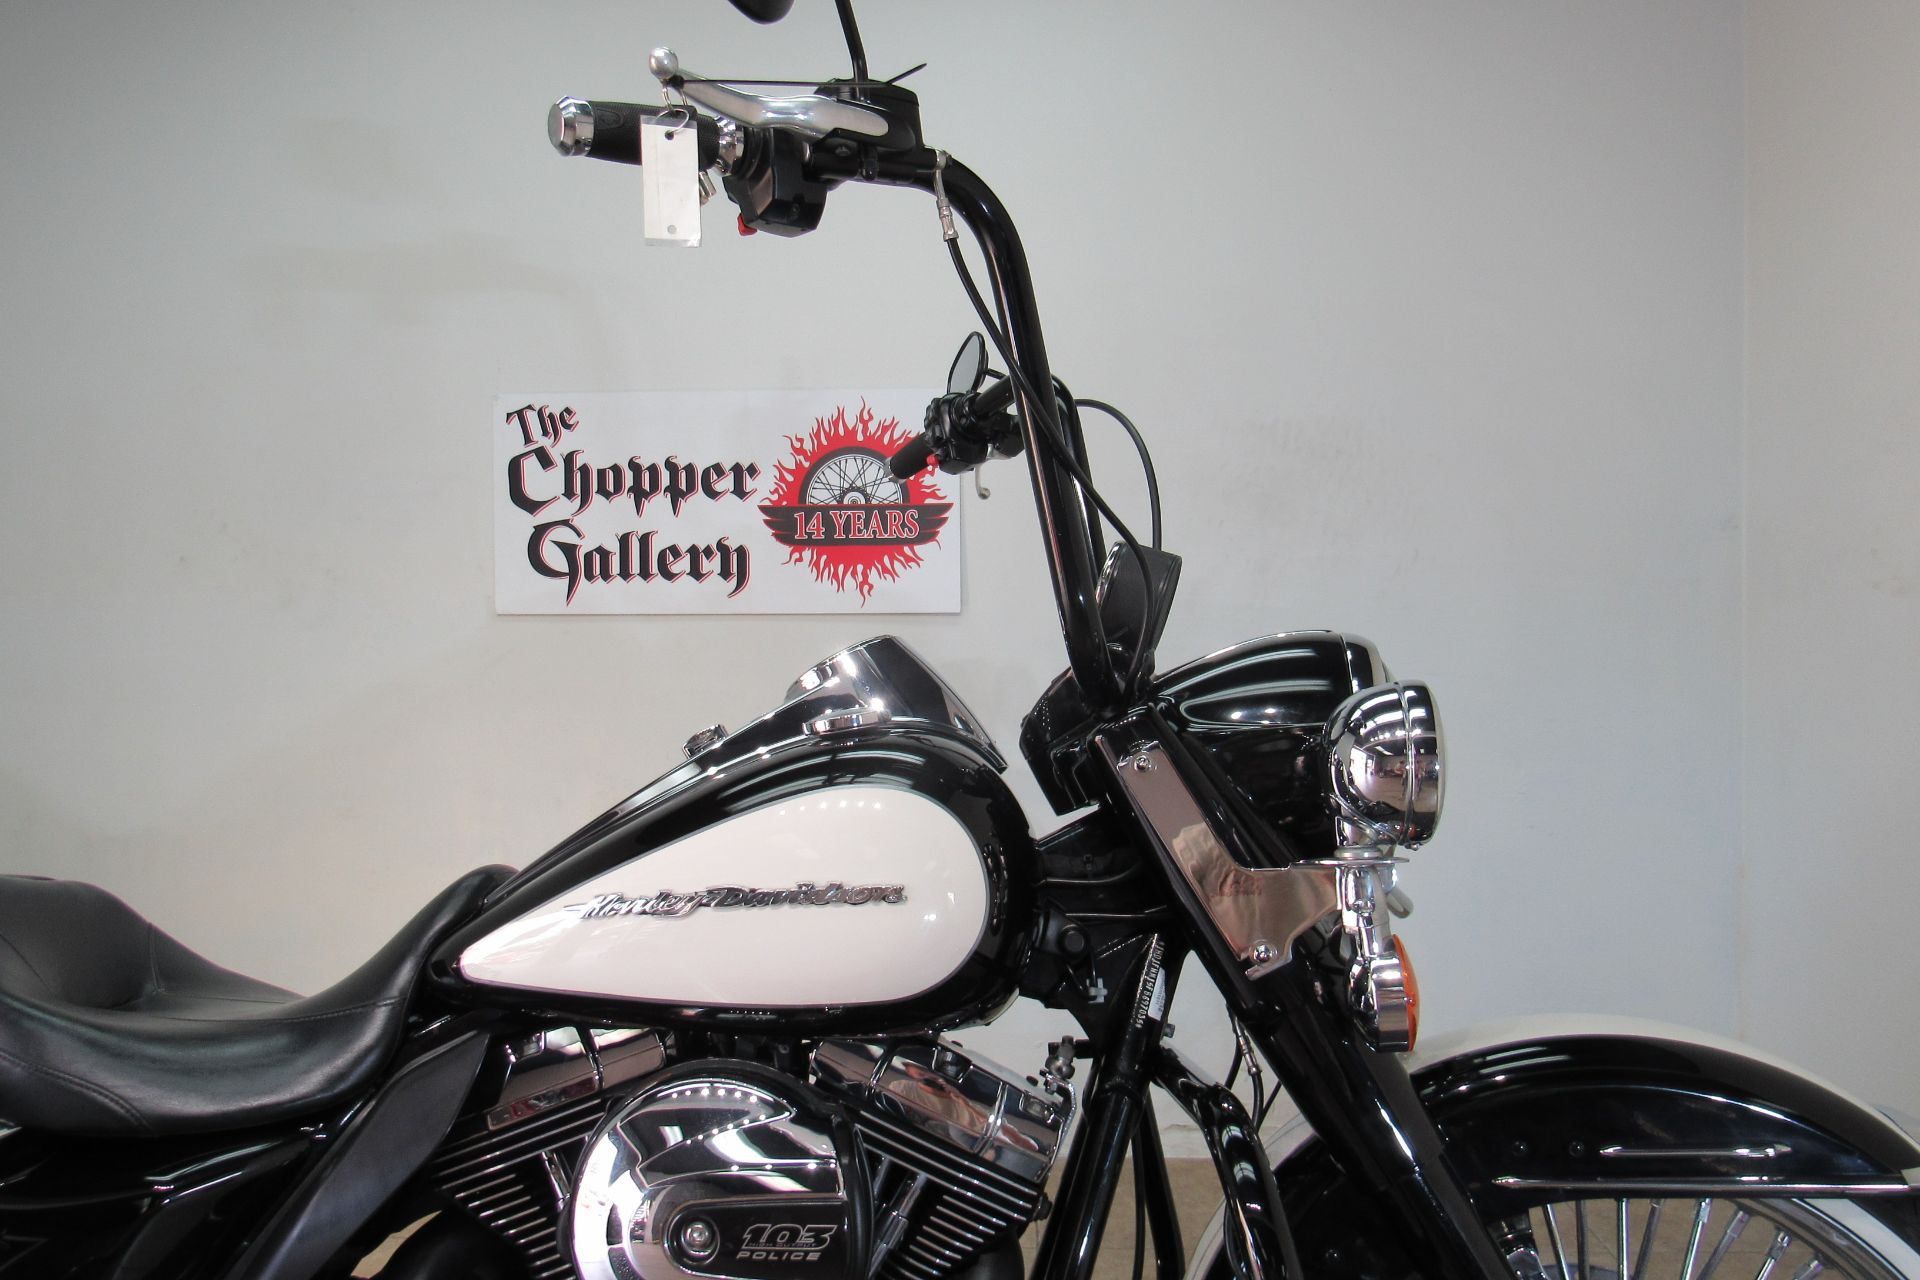 2015 Harley-Davidson Road King® in Temecula, California - Photo 9